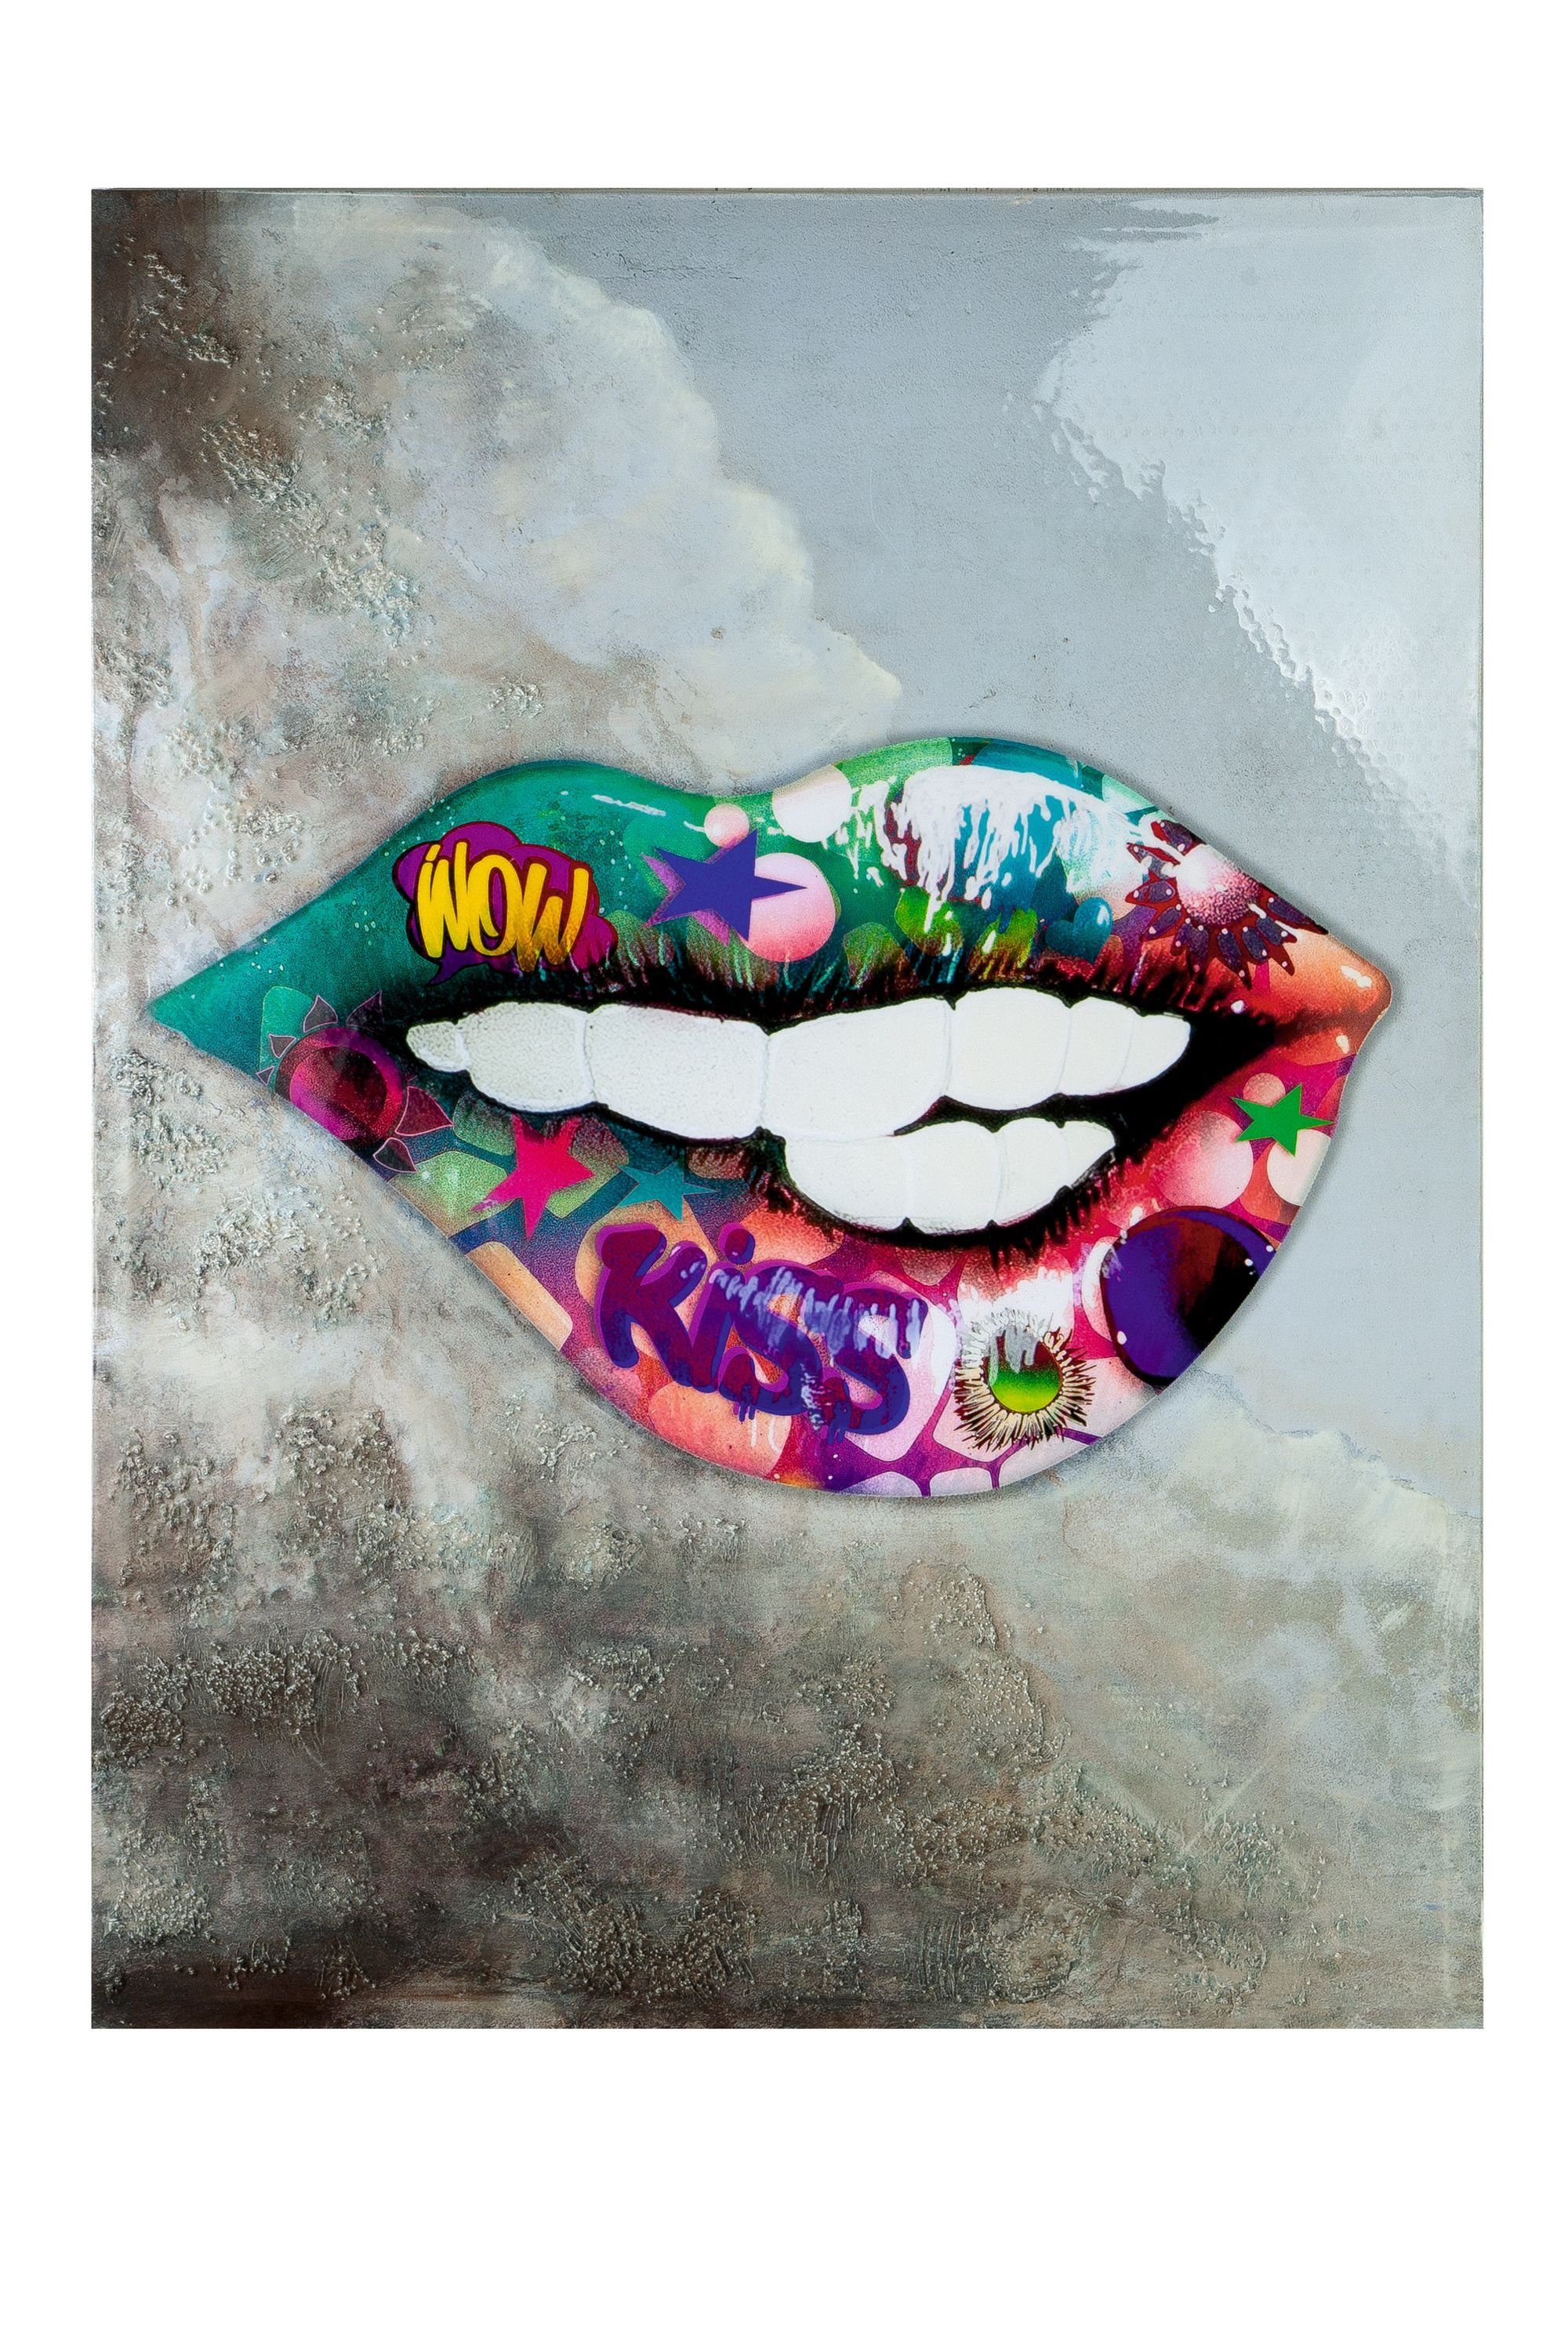 GILDE Bild GILDE Gemälde Street Art Kiss - mehrfarbig - H. 120cm x B. 90cm